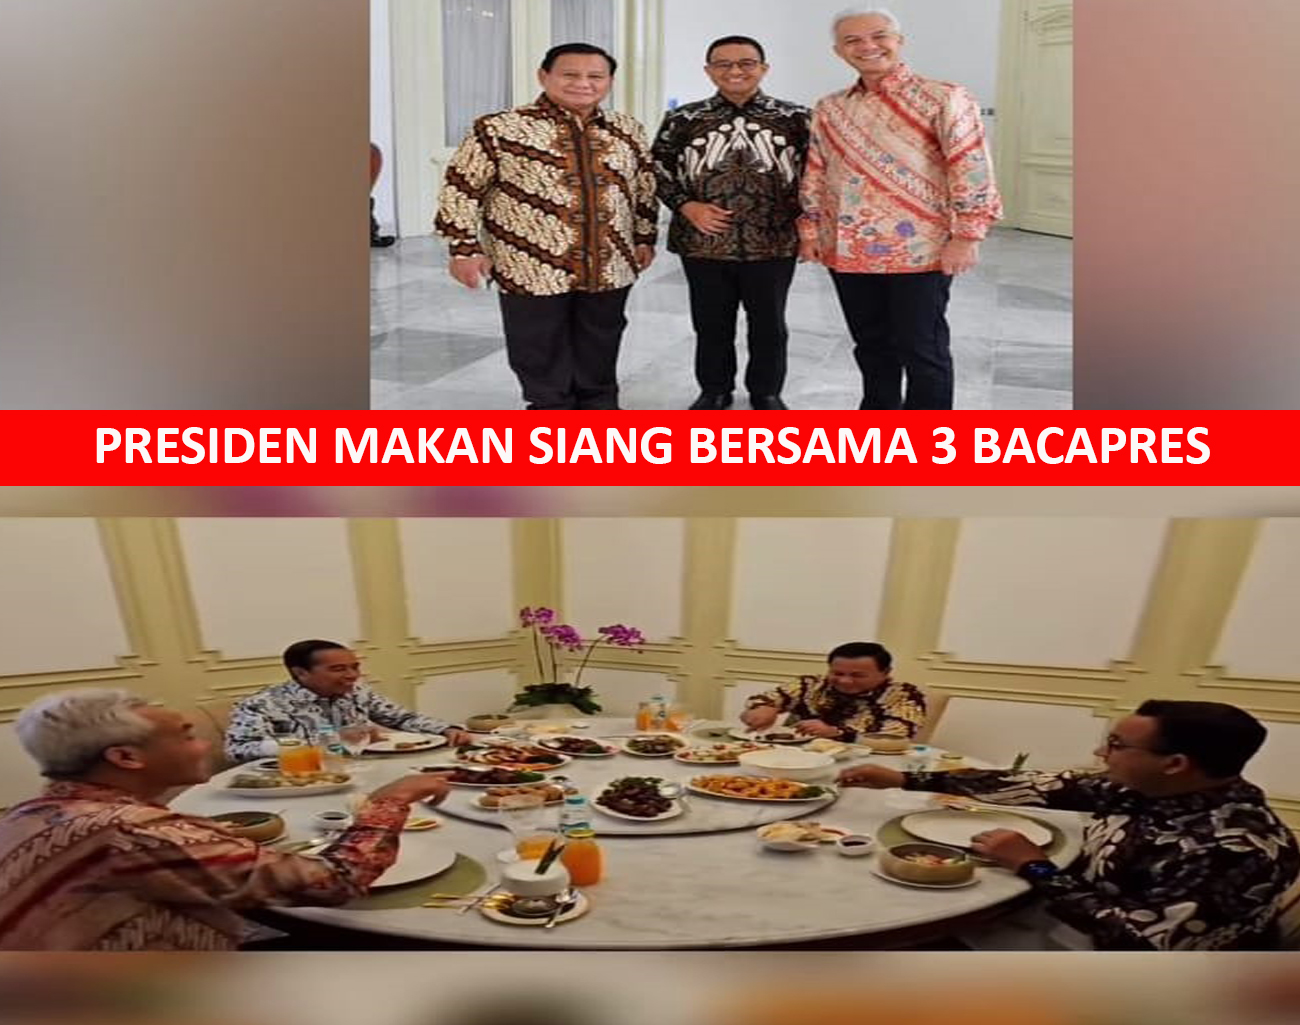 Bacapres Anies Baswedan Sampaikan ini kepada Presiden RI Jokowi, Aspirasinya Langsung Dapat Jawaban